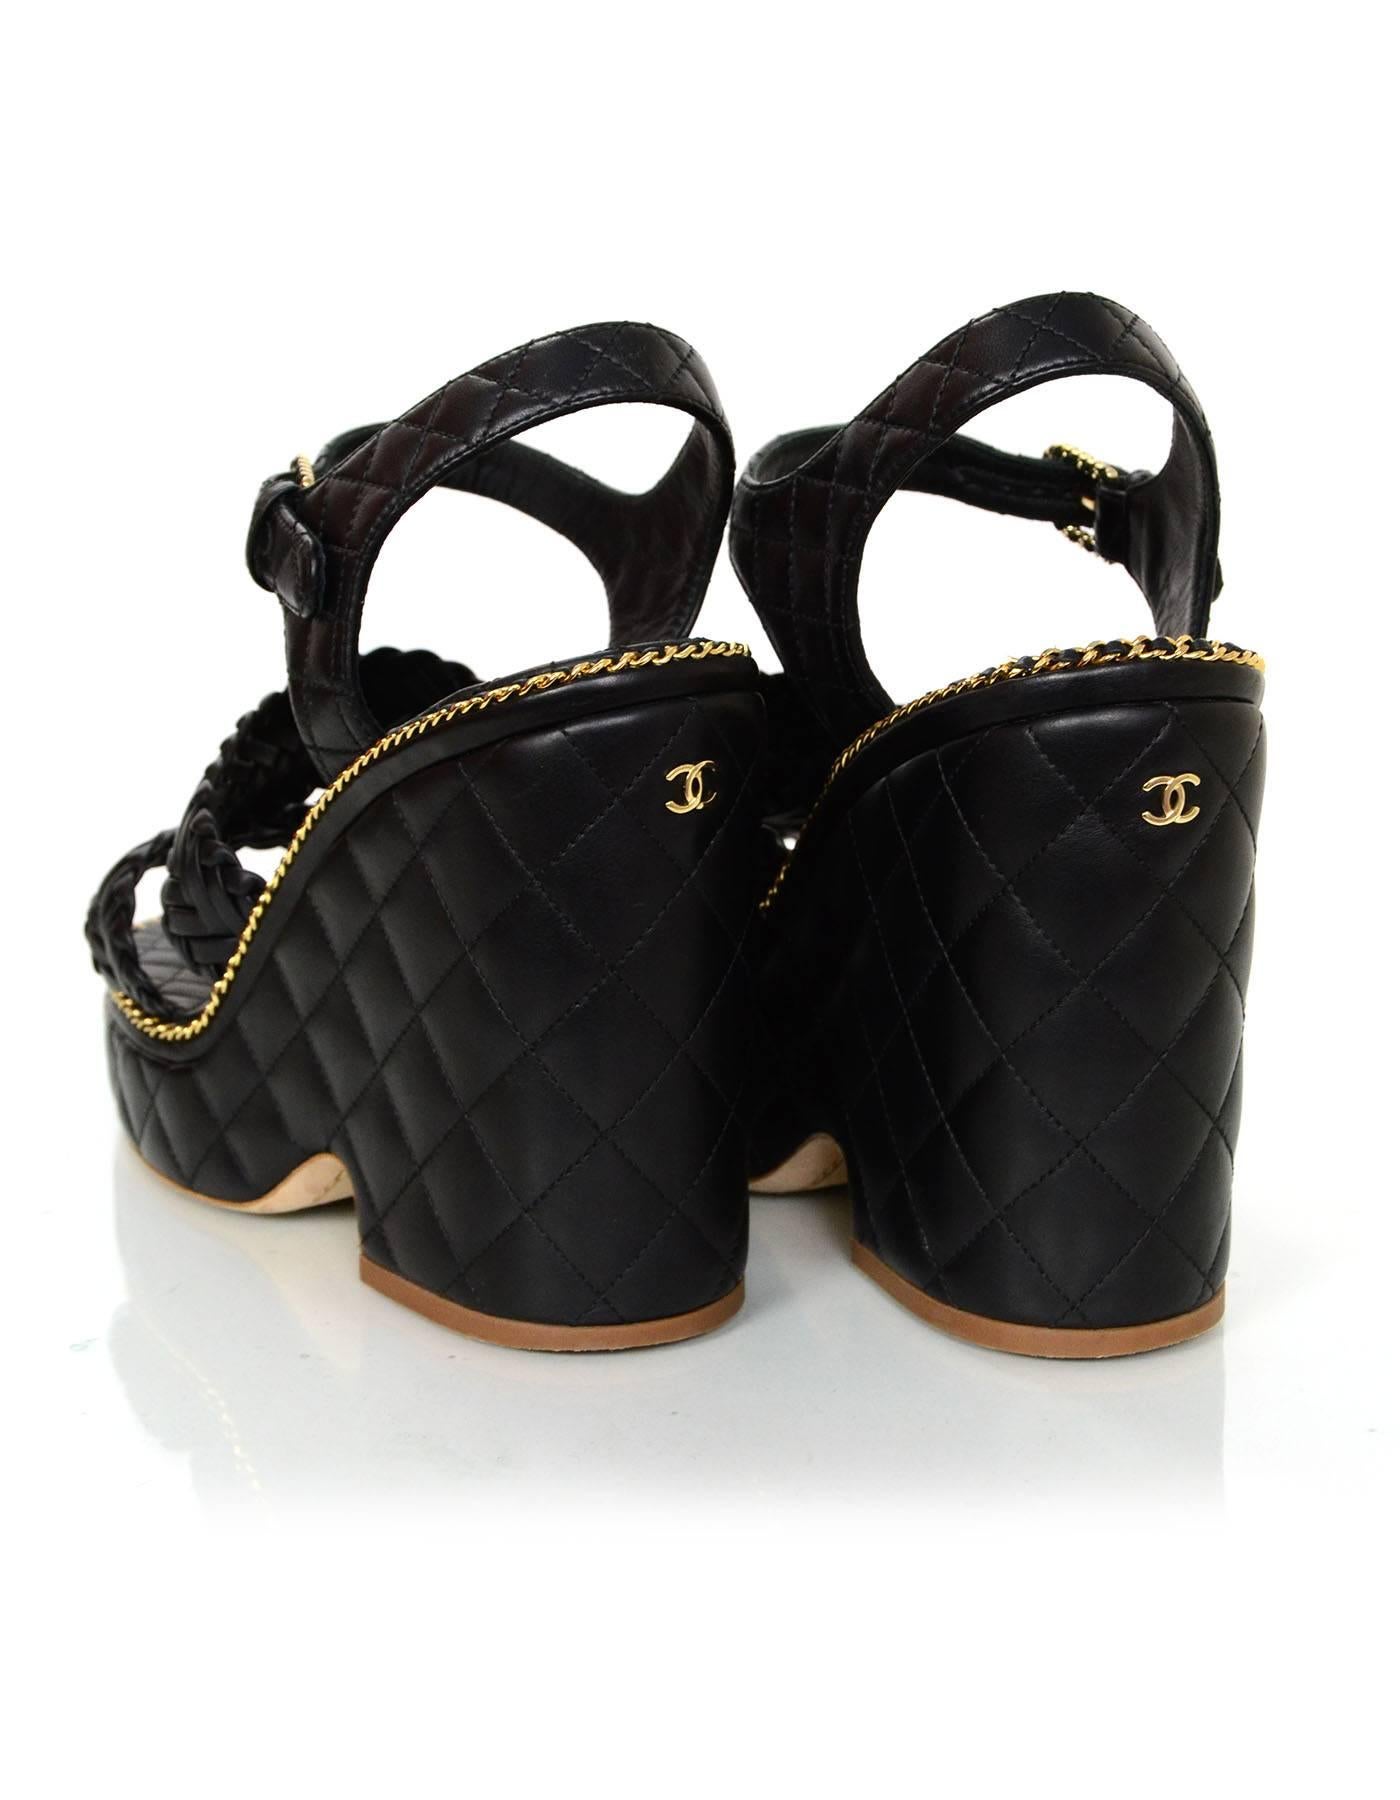 Women's Chanel Black Quilted Platform Sandals Sz 38.5 rt. $1, 550